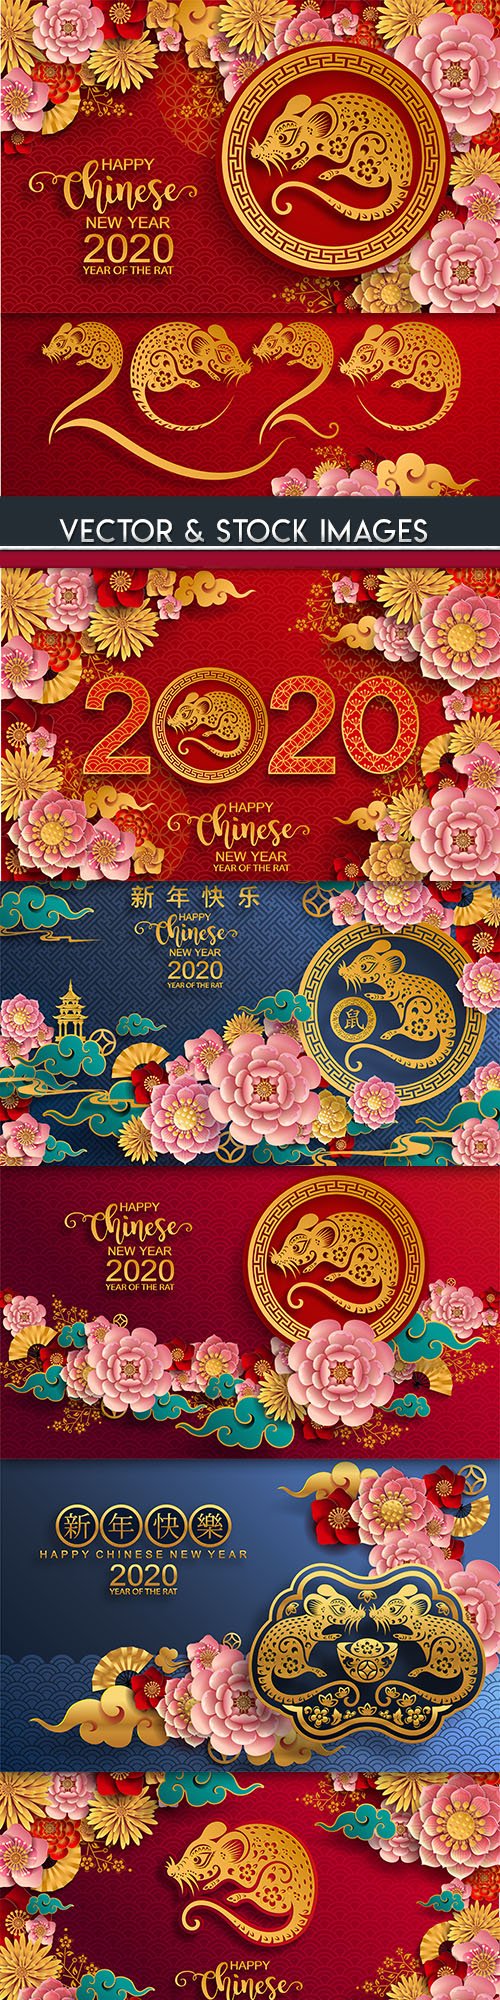 Rat symbol of Chinese New Year 2020 illustration 2